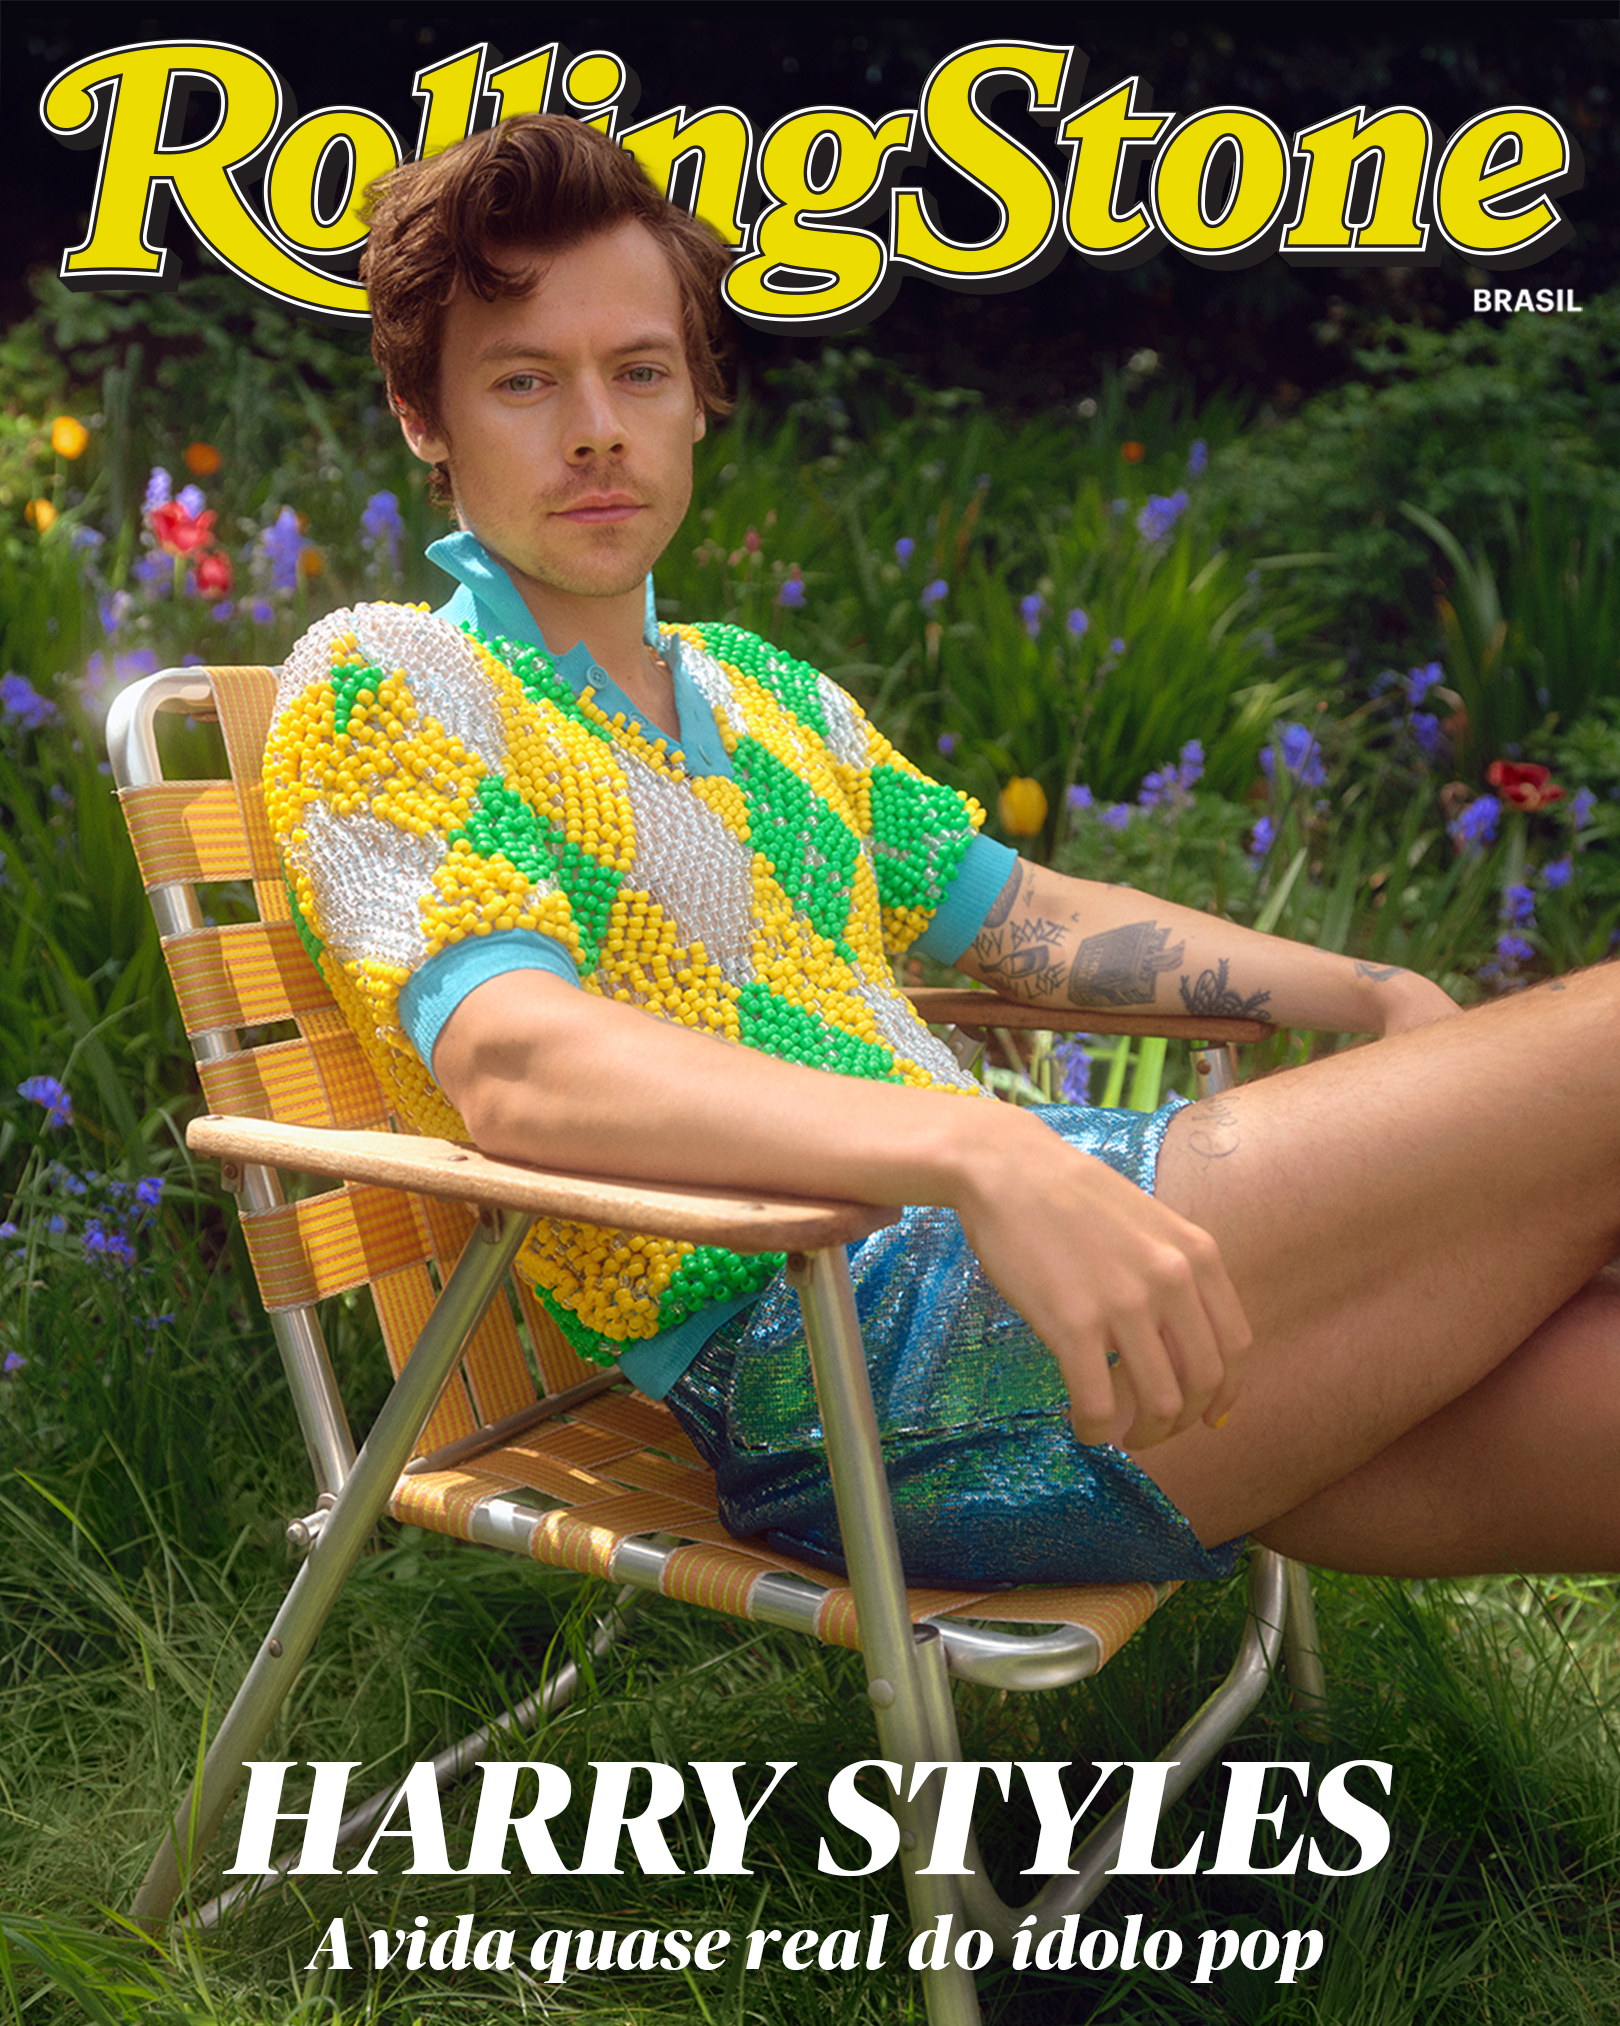 Harry Styles para a capa da Rolling Stone global